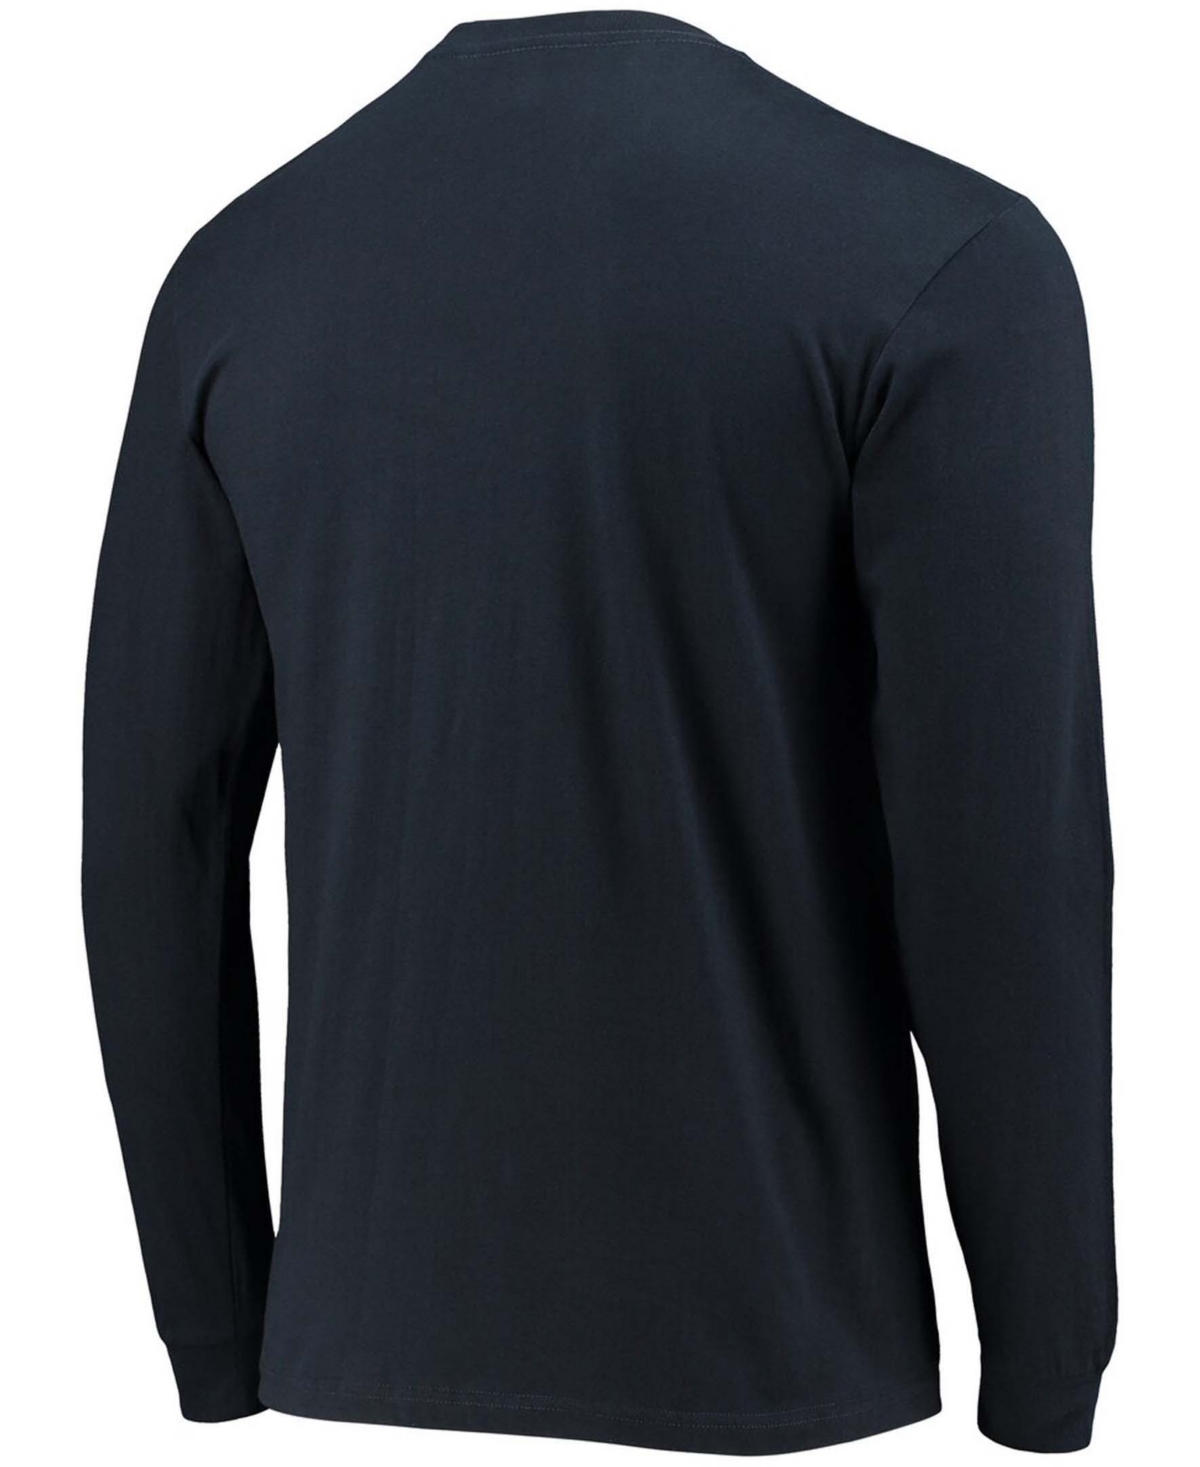 Shop Starter Men's Navy Tennessee Titans Halftime Long Sleeve T-shirt